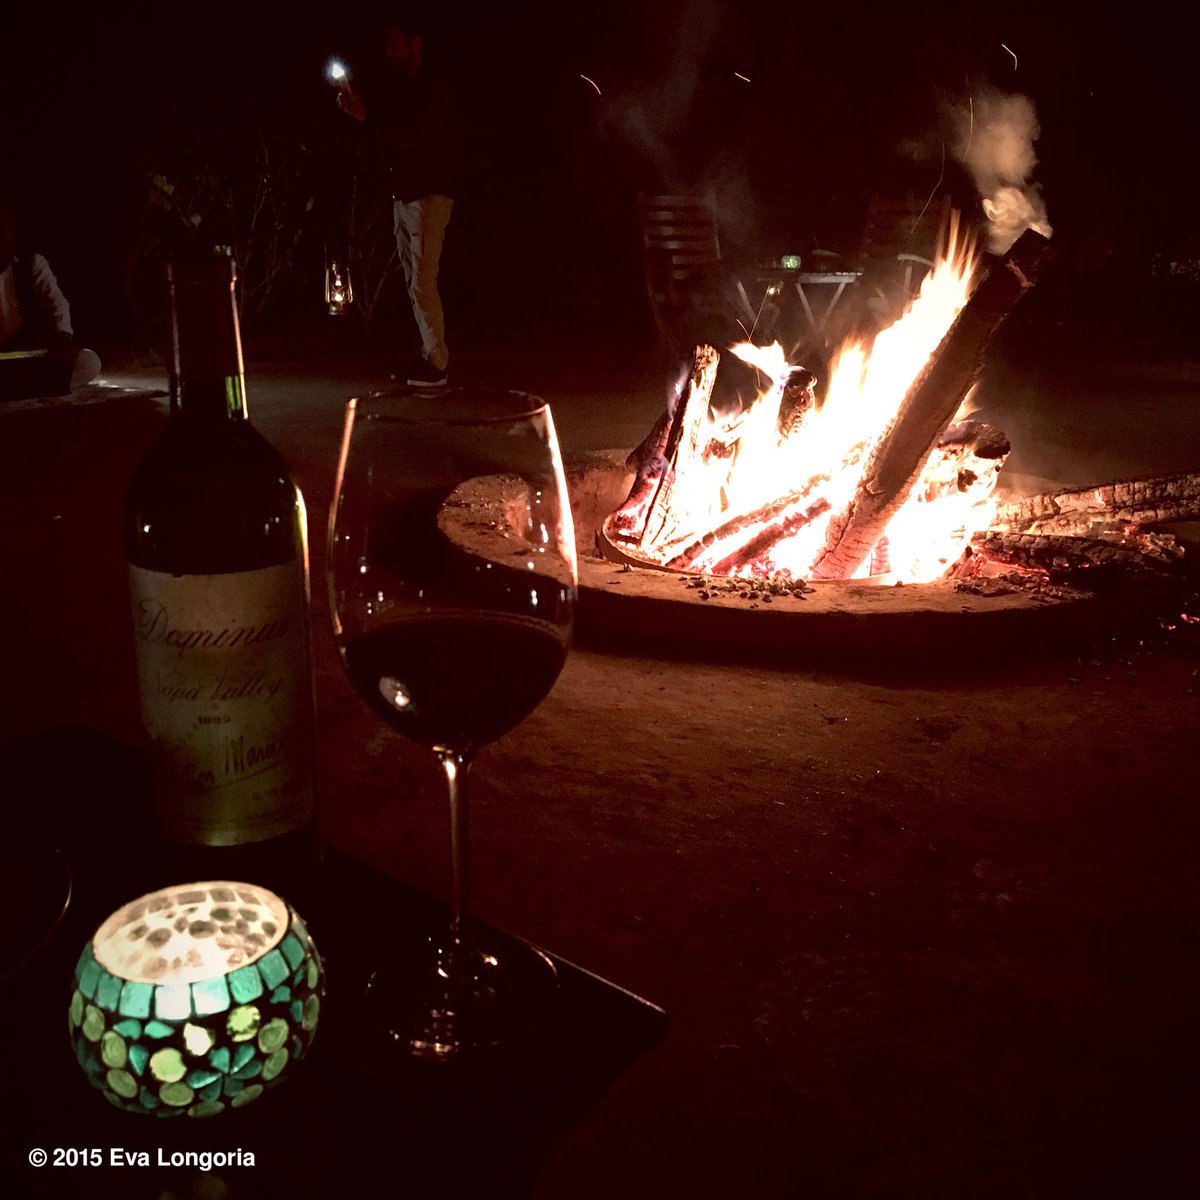 Bonfire in India with my California Cabernet! I'm in heaven! #India #WineOClock https://t.co/IIsxKQJVna